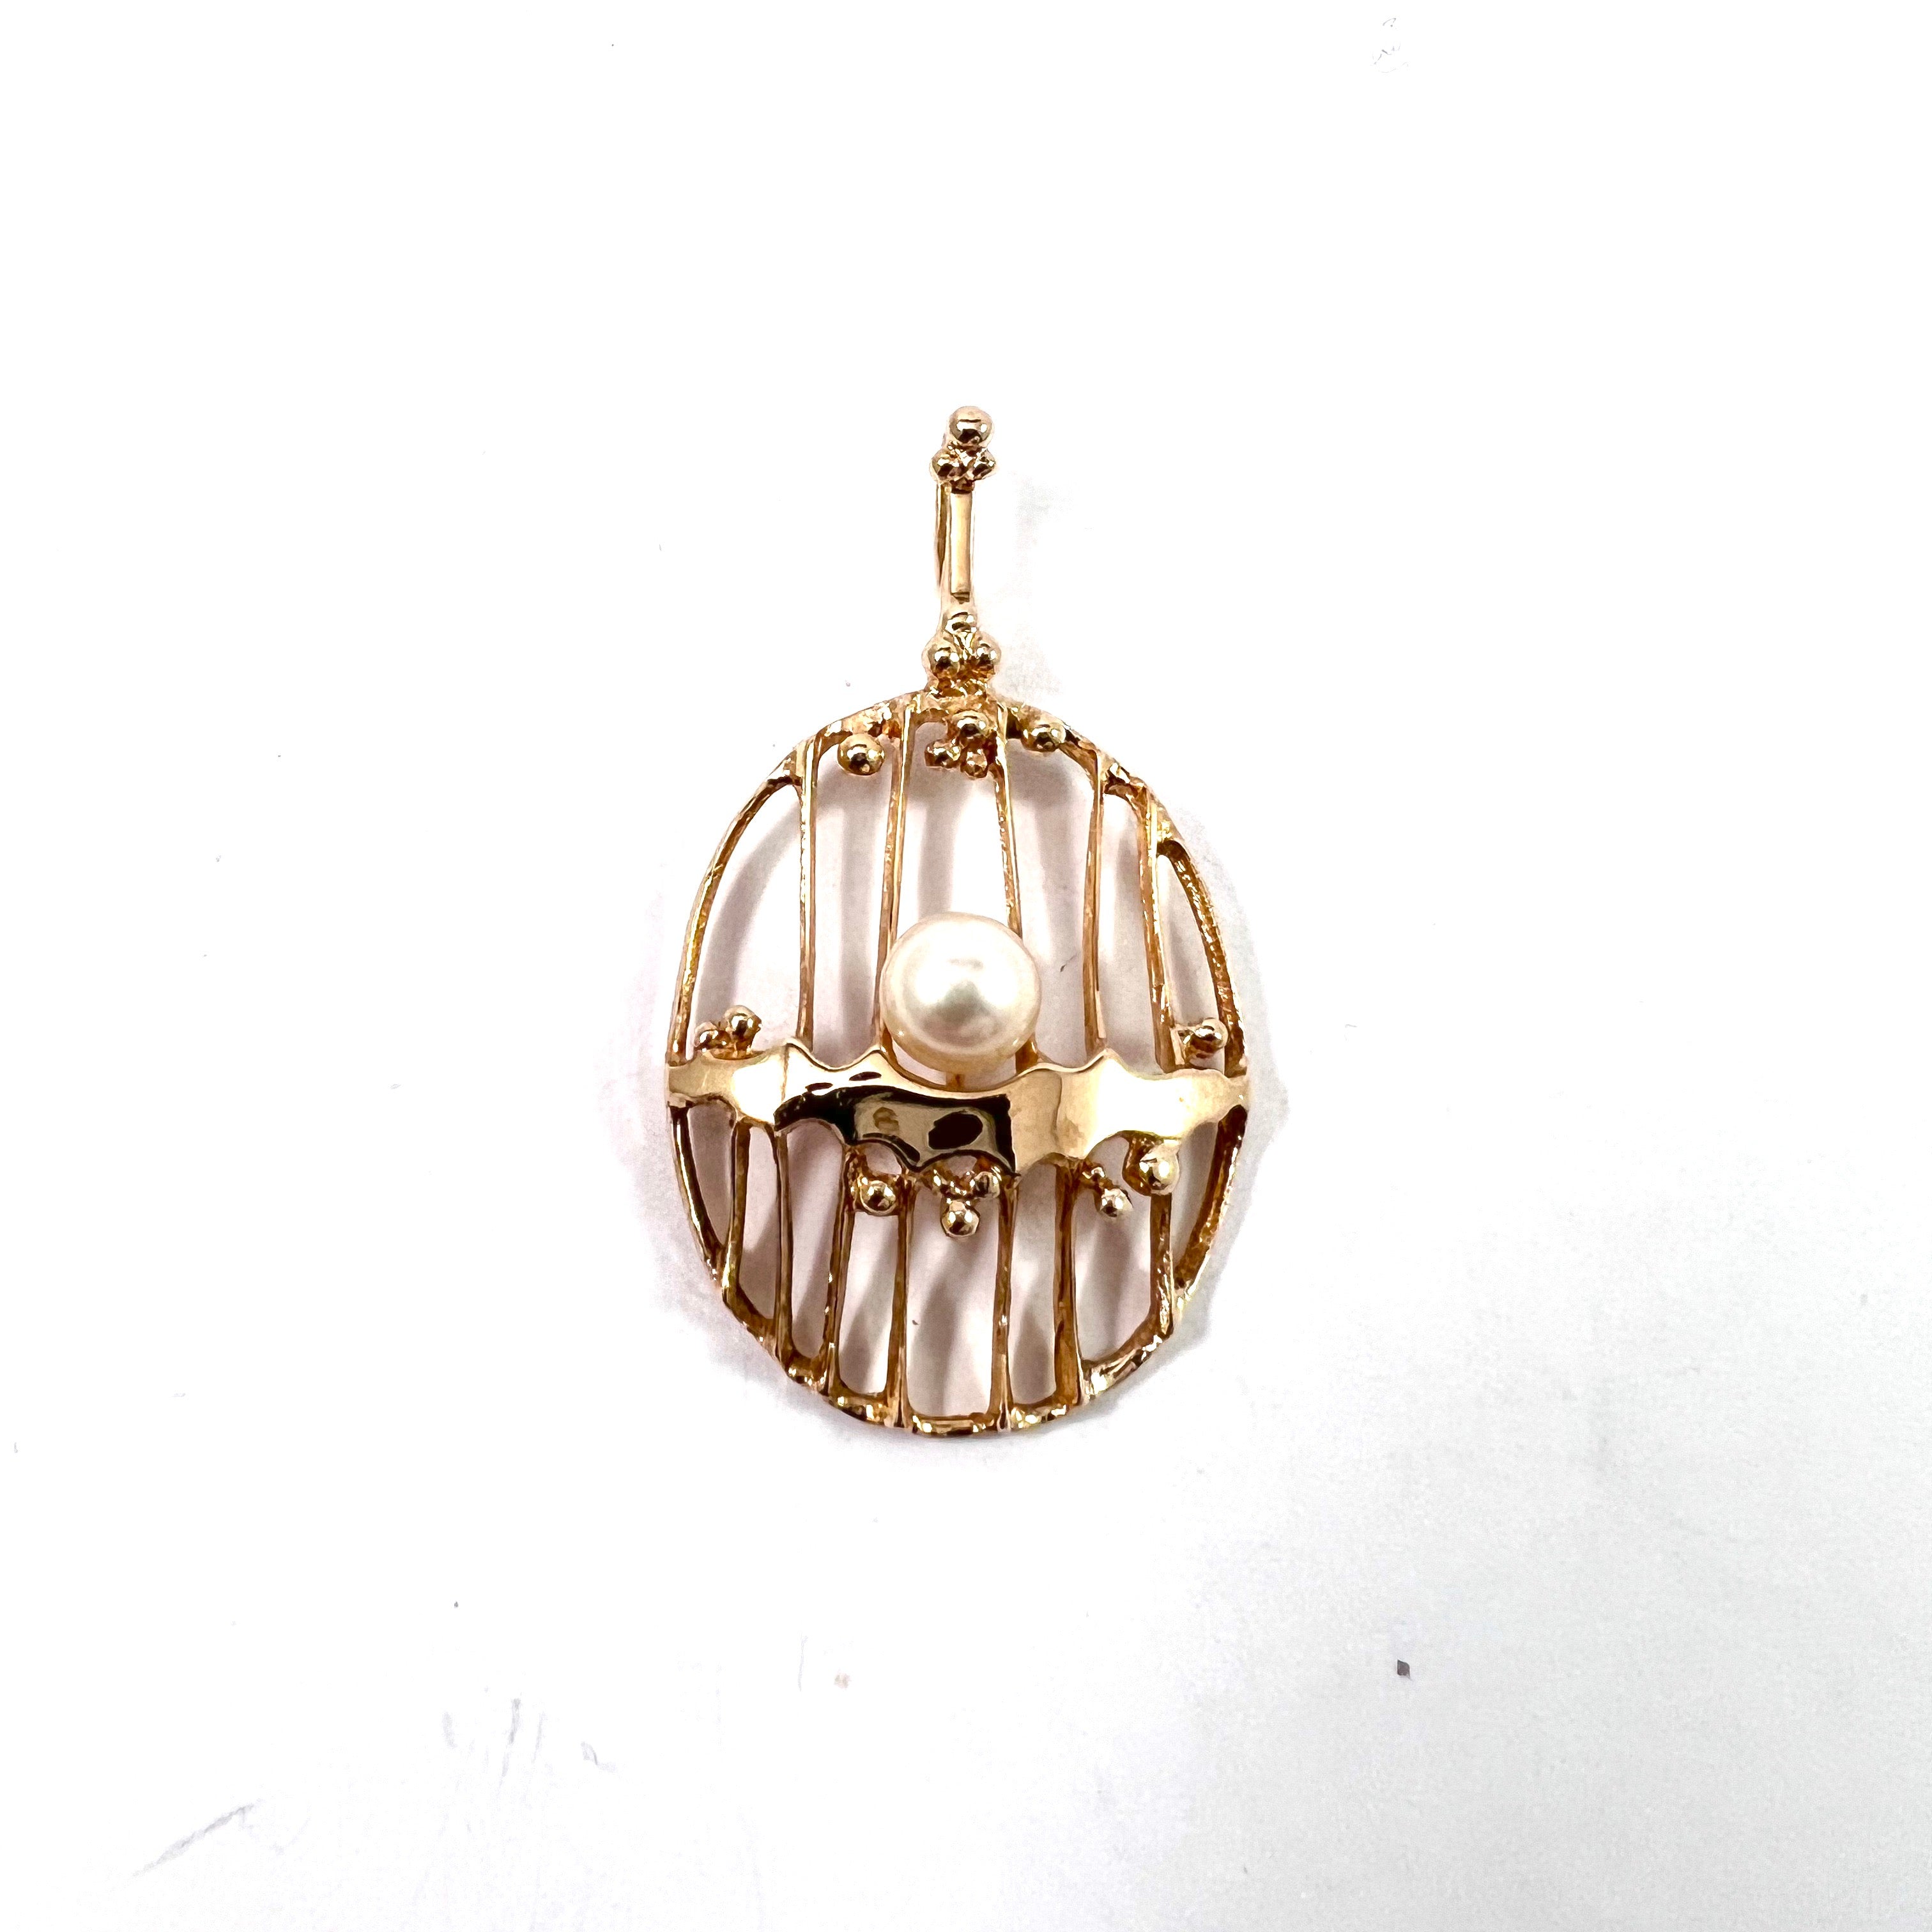 Teka Theodor Klotz, Germany 1960-70s. Vintage 18k Gold Cultured Pearl Pendant.